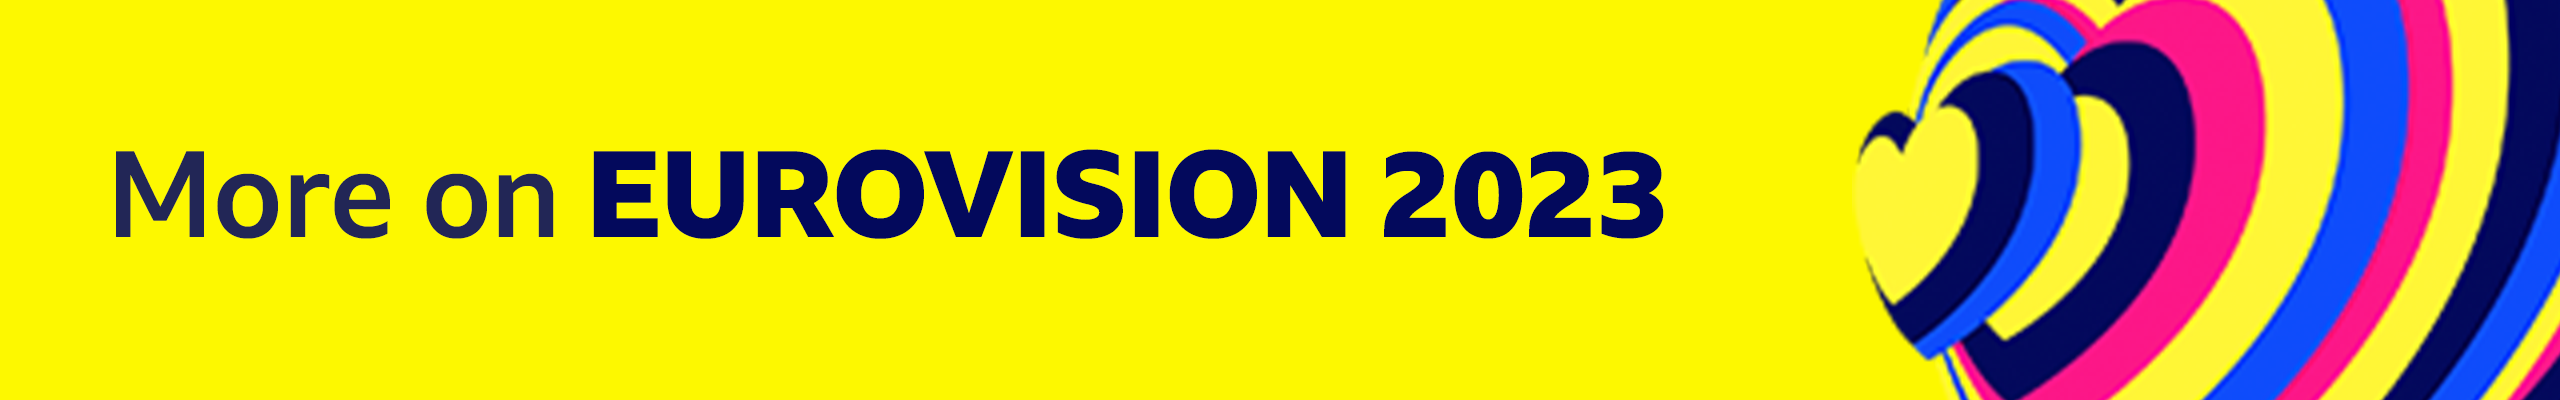 Eurovision 2023 banner